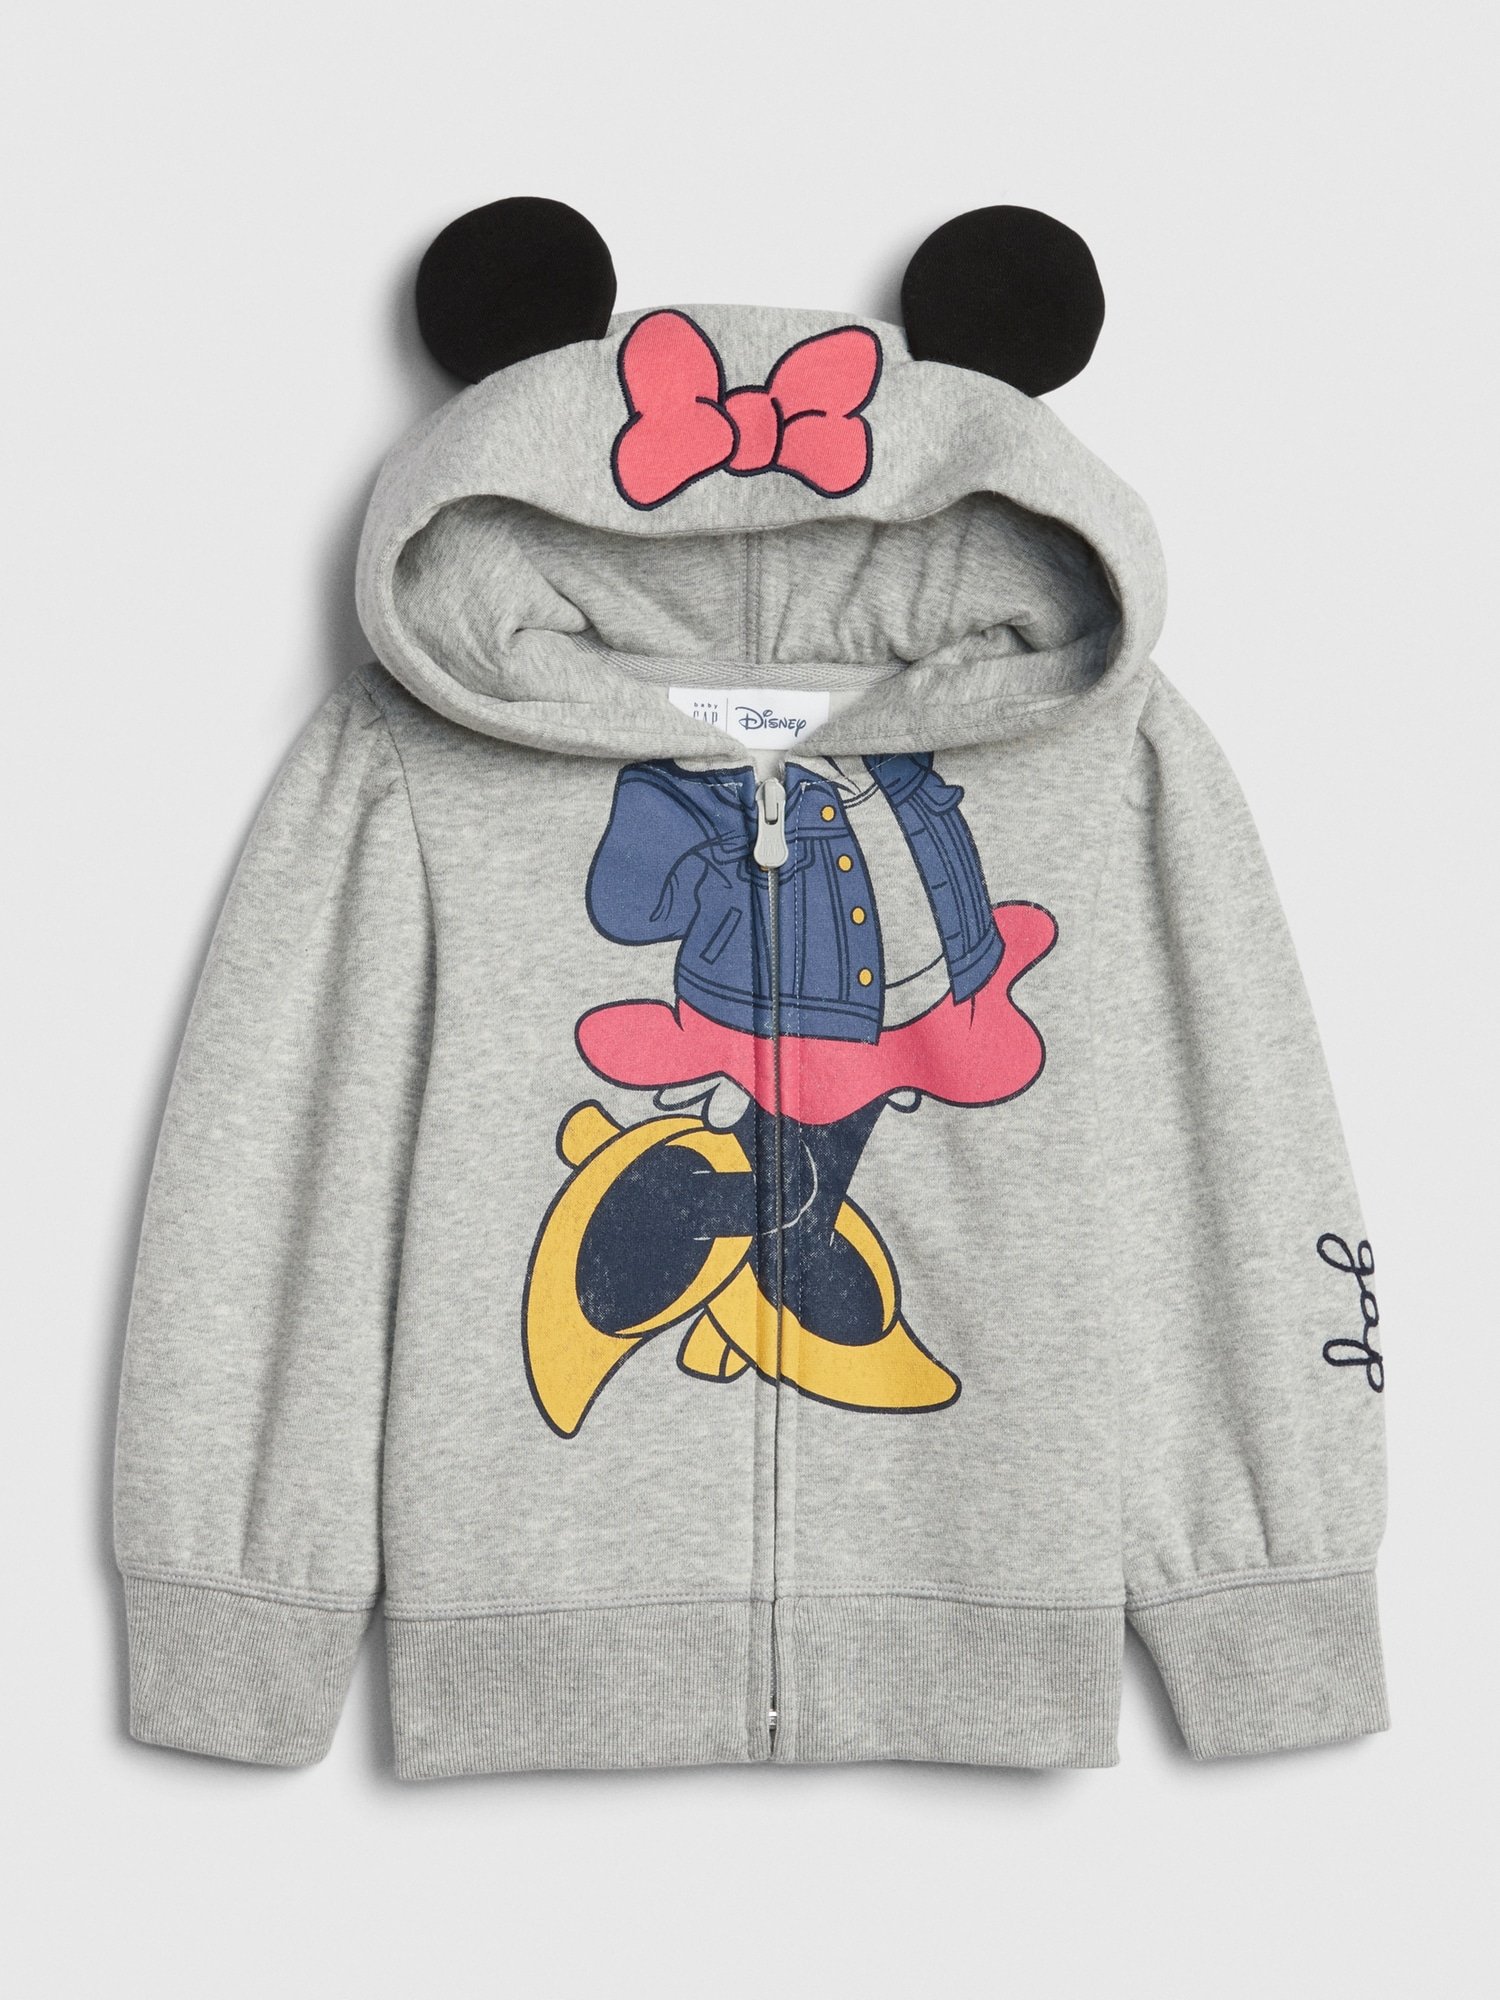 Disney Minnie Mouse Sweatshirt product image